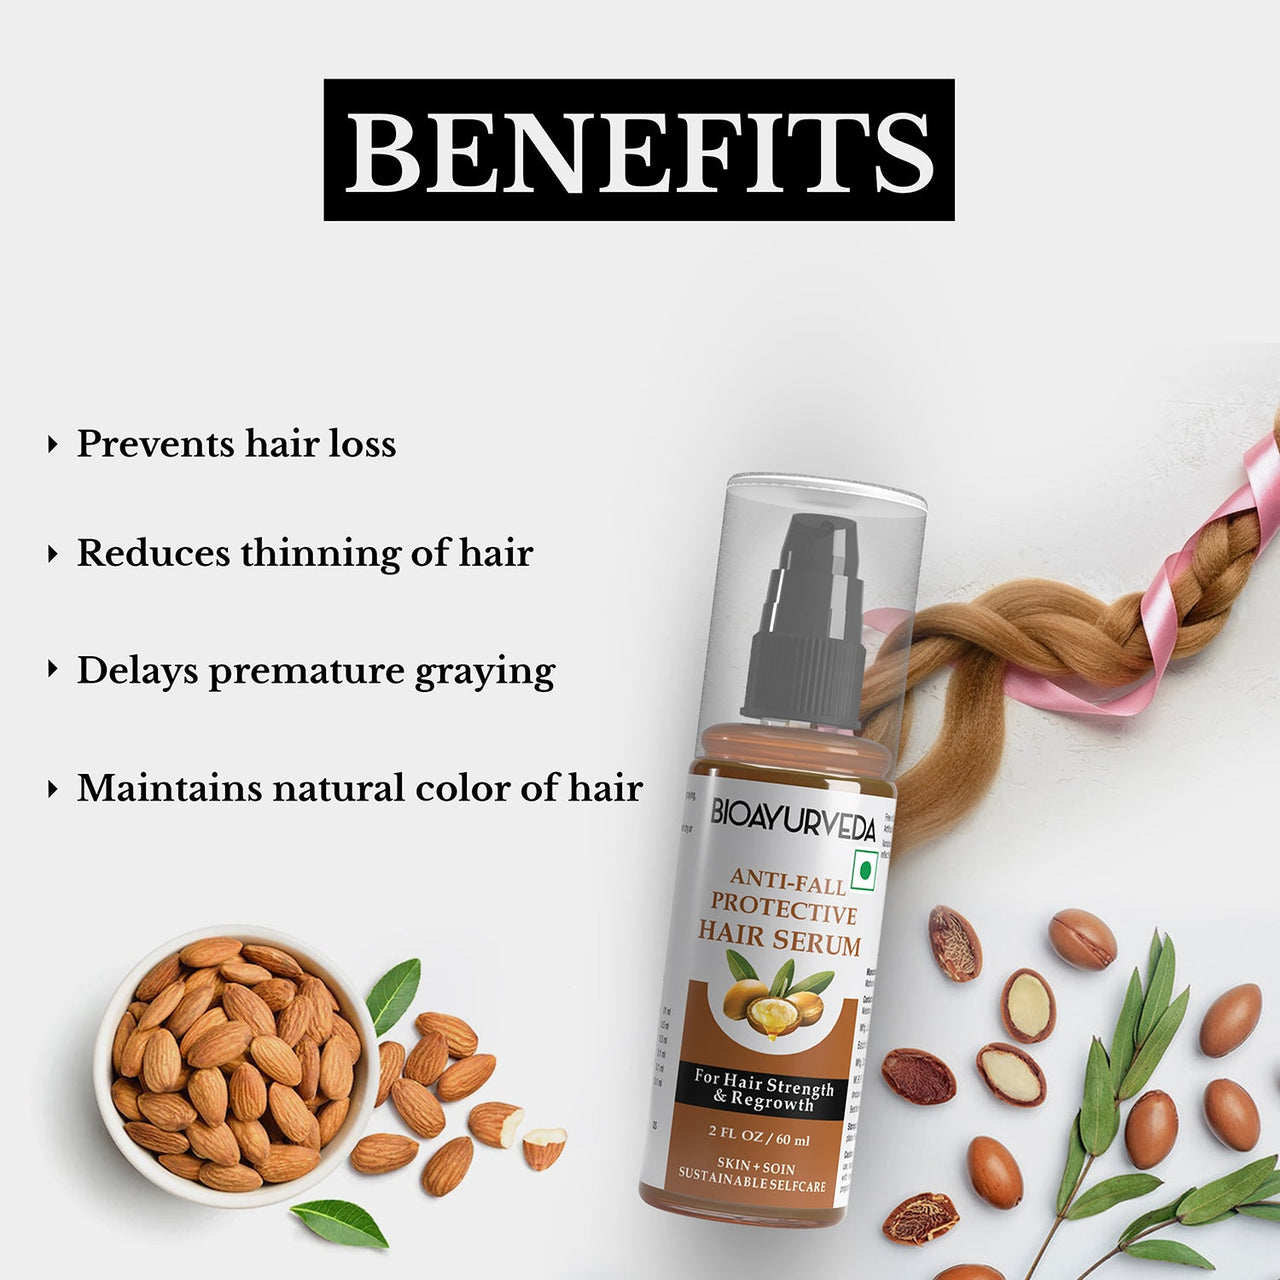 Anti-Fall Protective Hair Serum Benefits